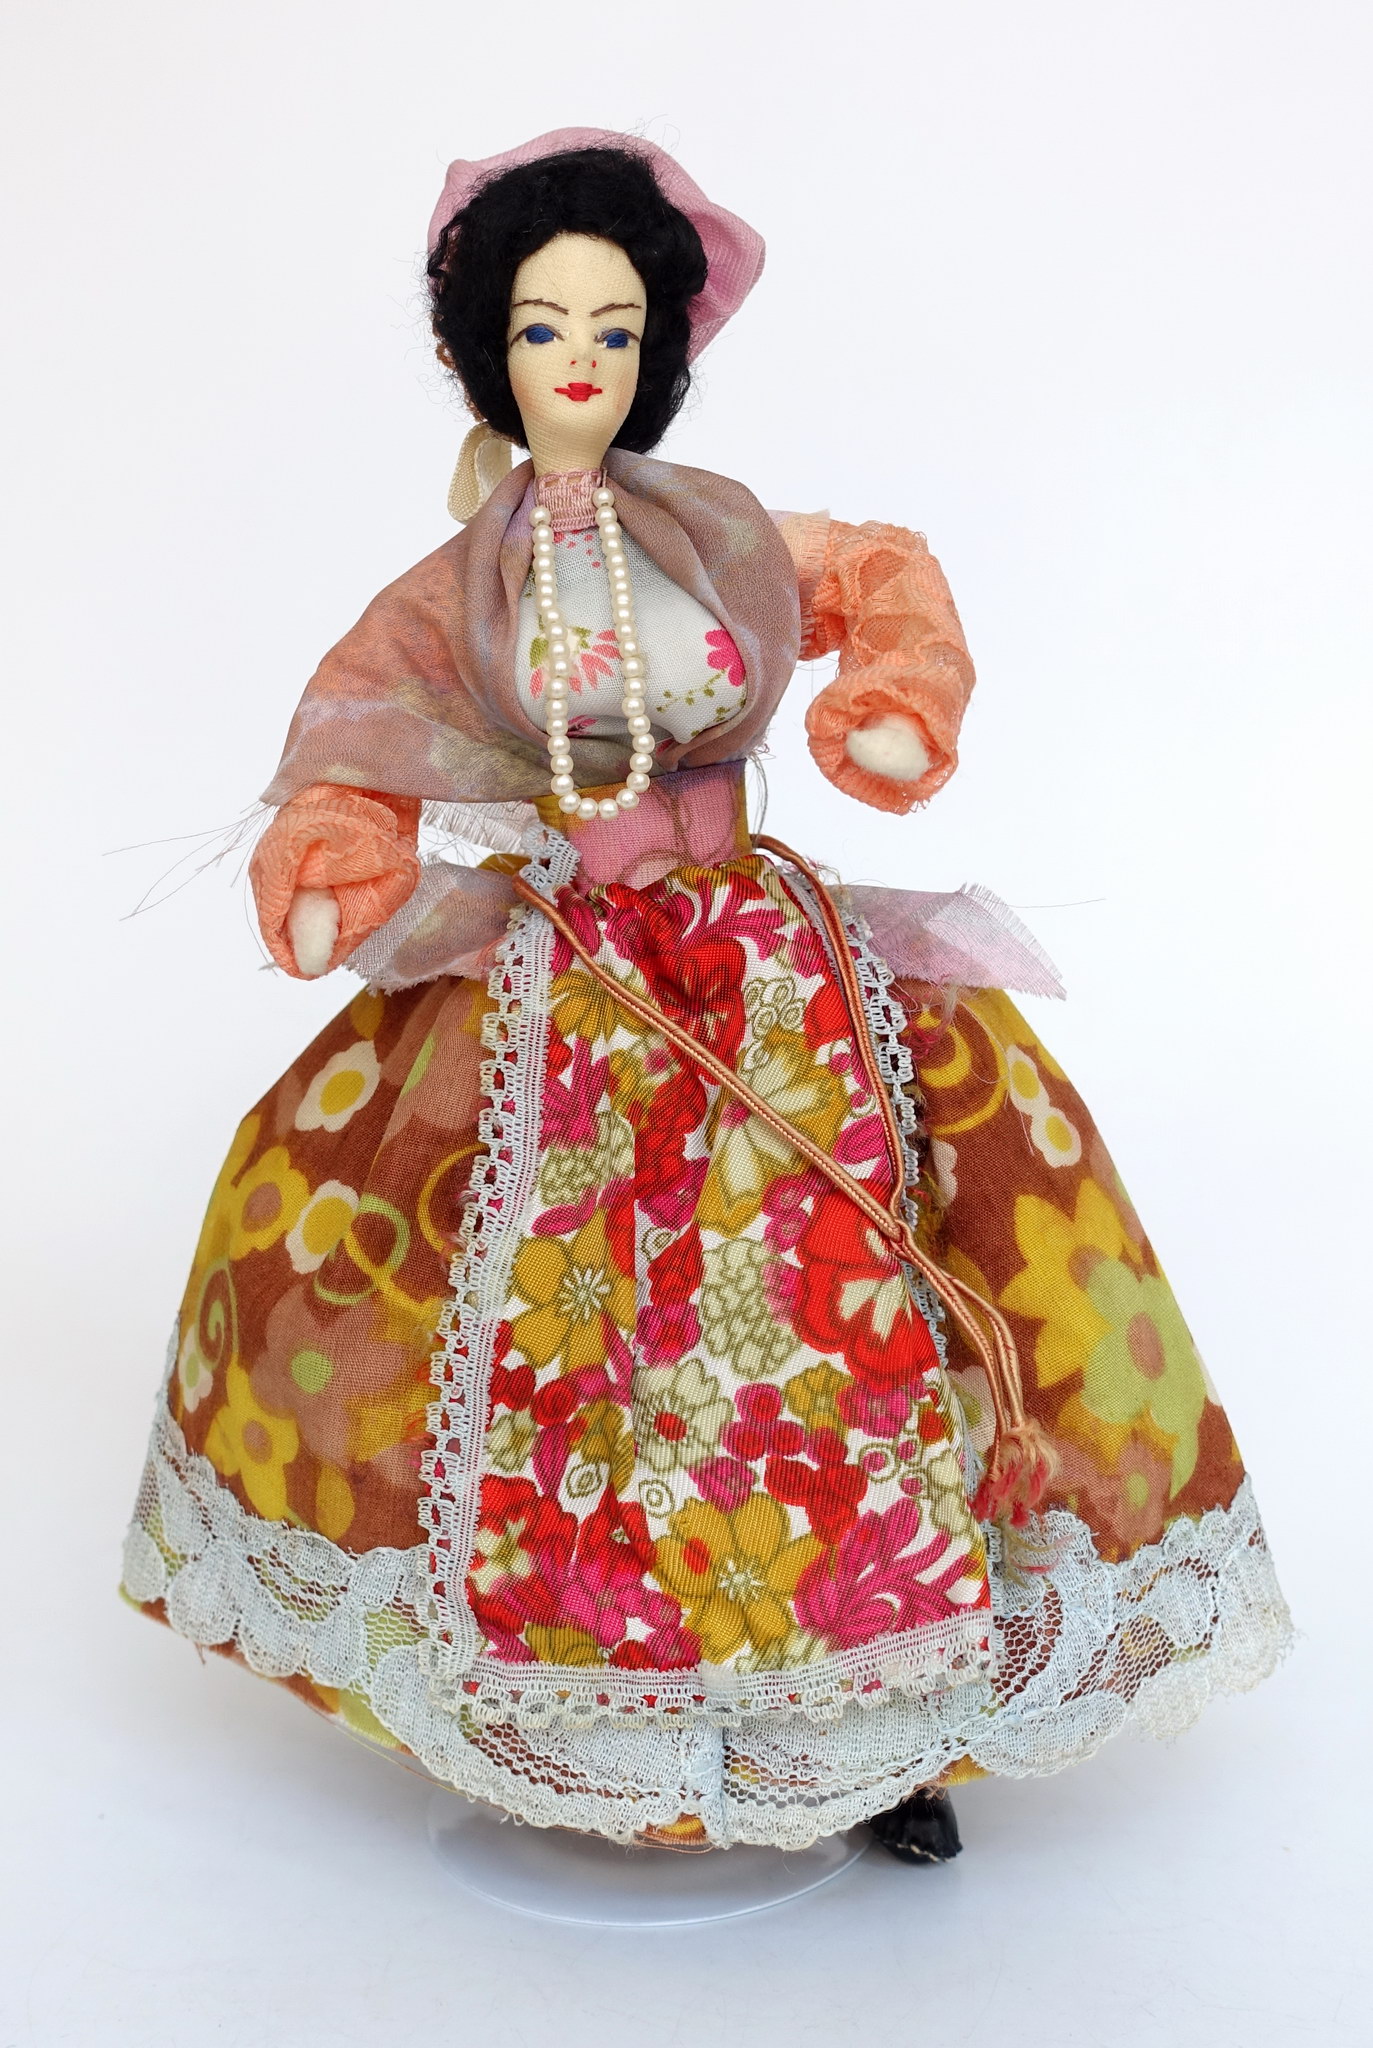 Slovenia Doll Gorenjska Upper Carniola | National costume dolls from ...